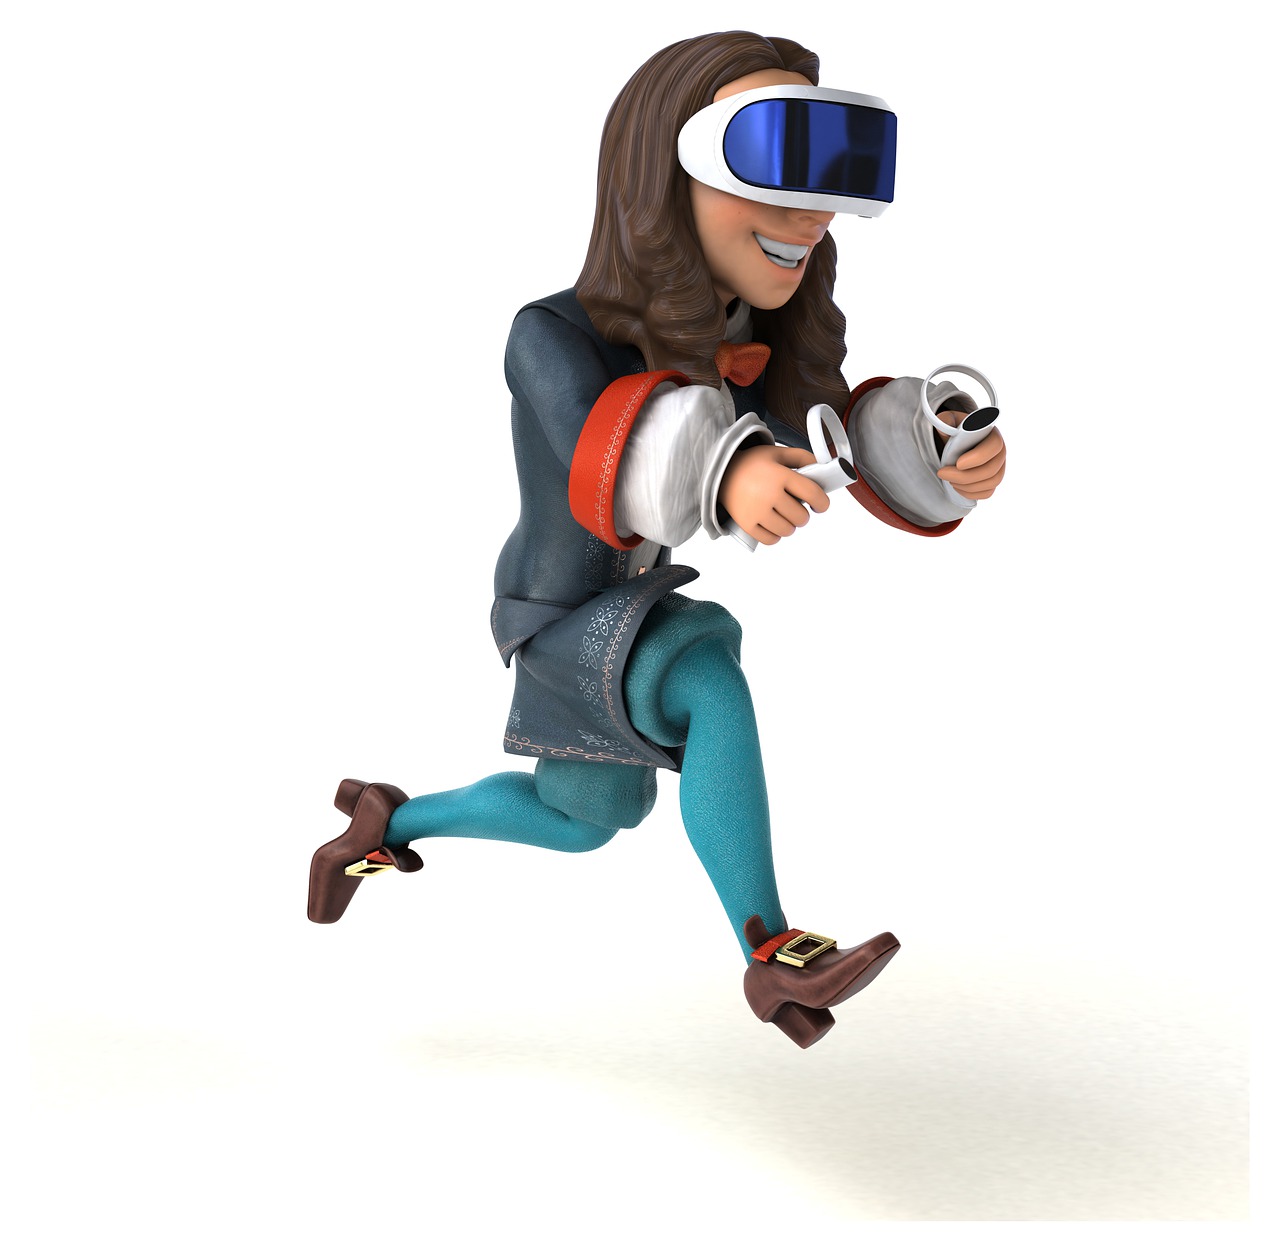 Comic figur mit VR Brille